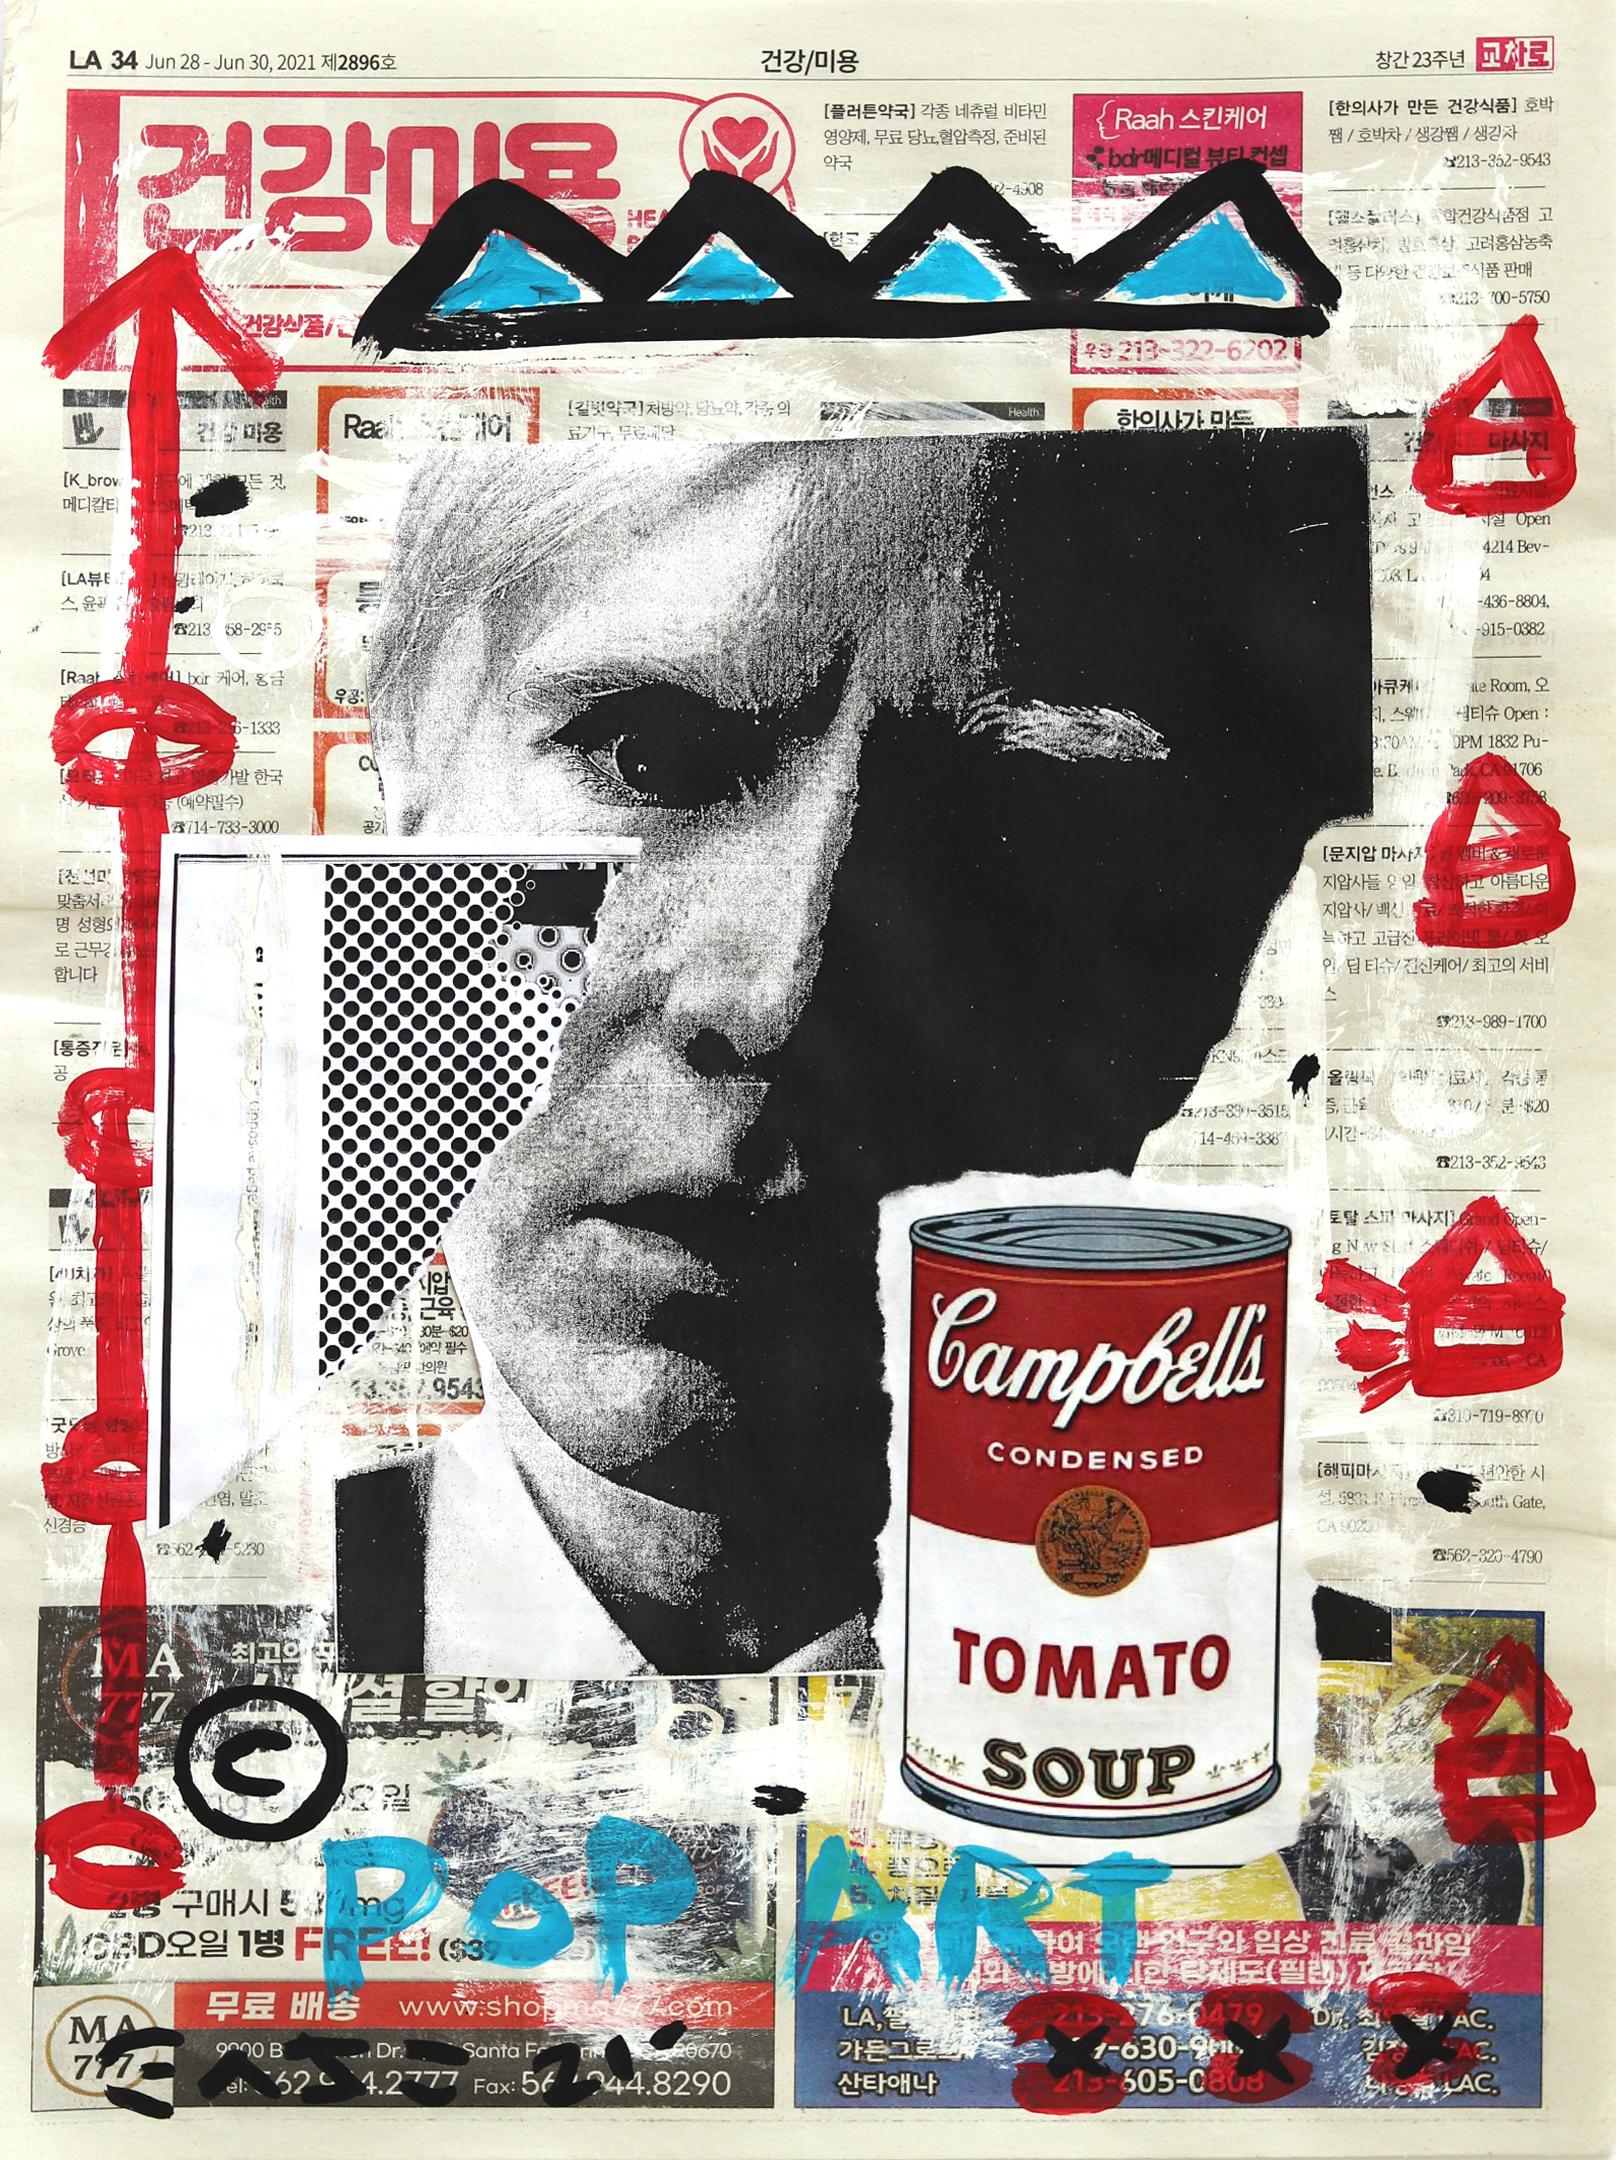 "Soup For Warhol" Original Gary John Contemporary Pop Mixed Media on Newspaper